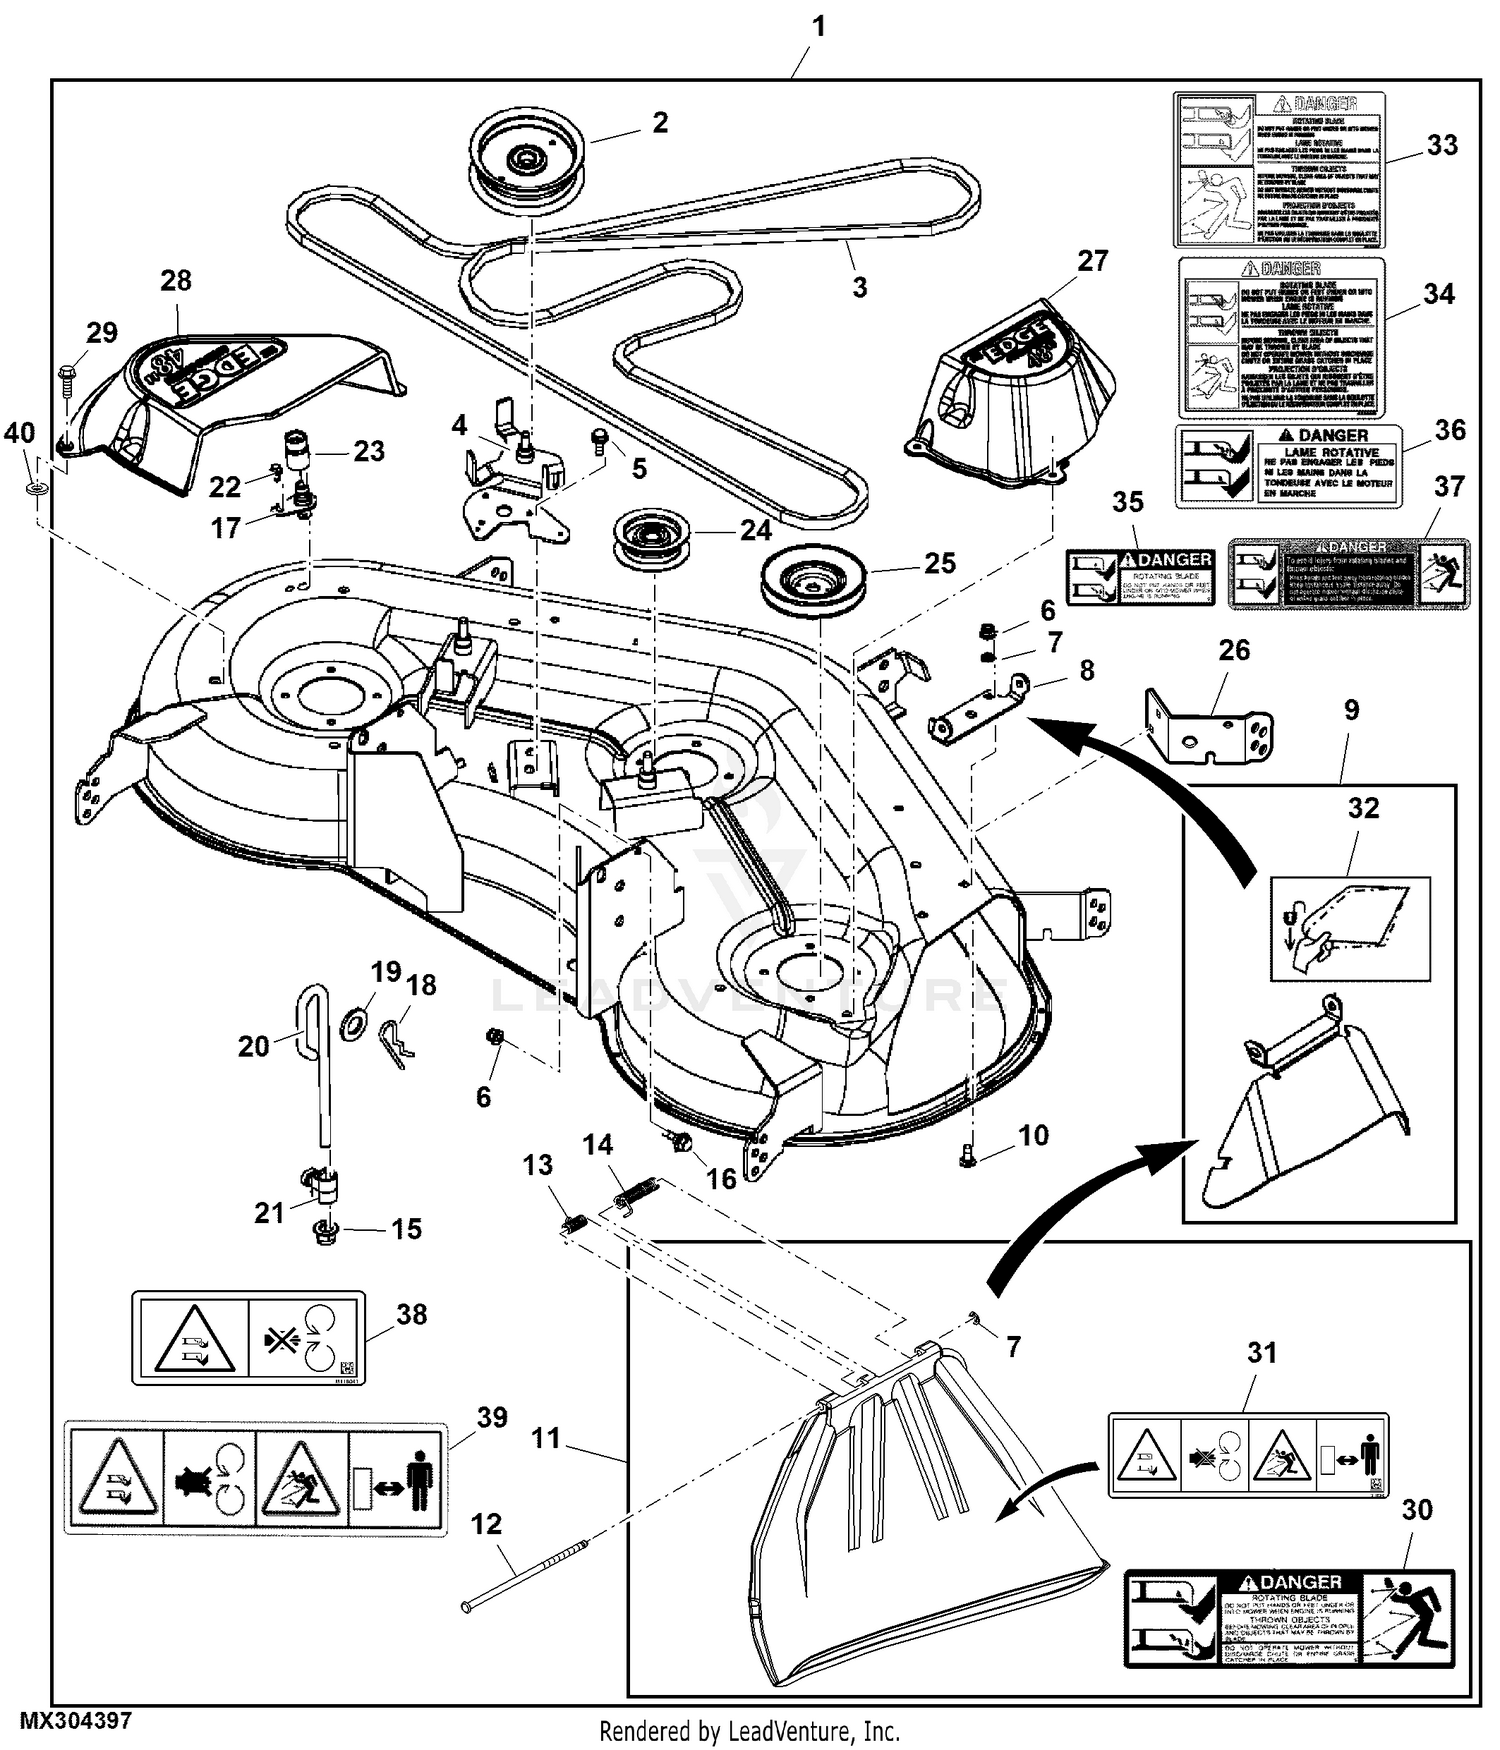 John Deere 140 Parts Diagram Images And Photos Finder